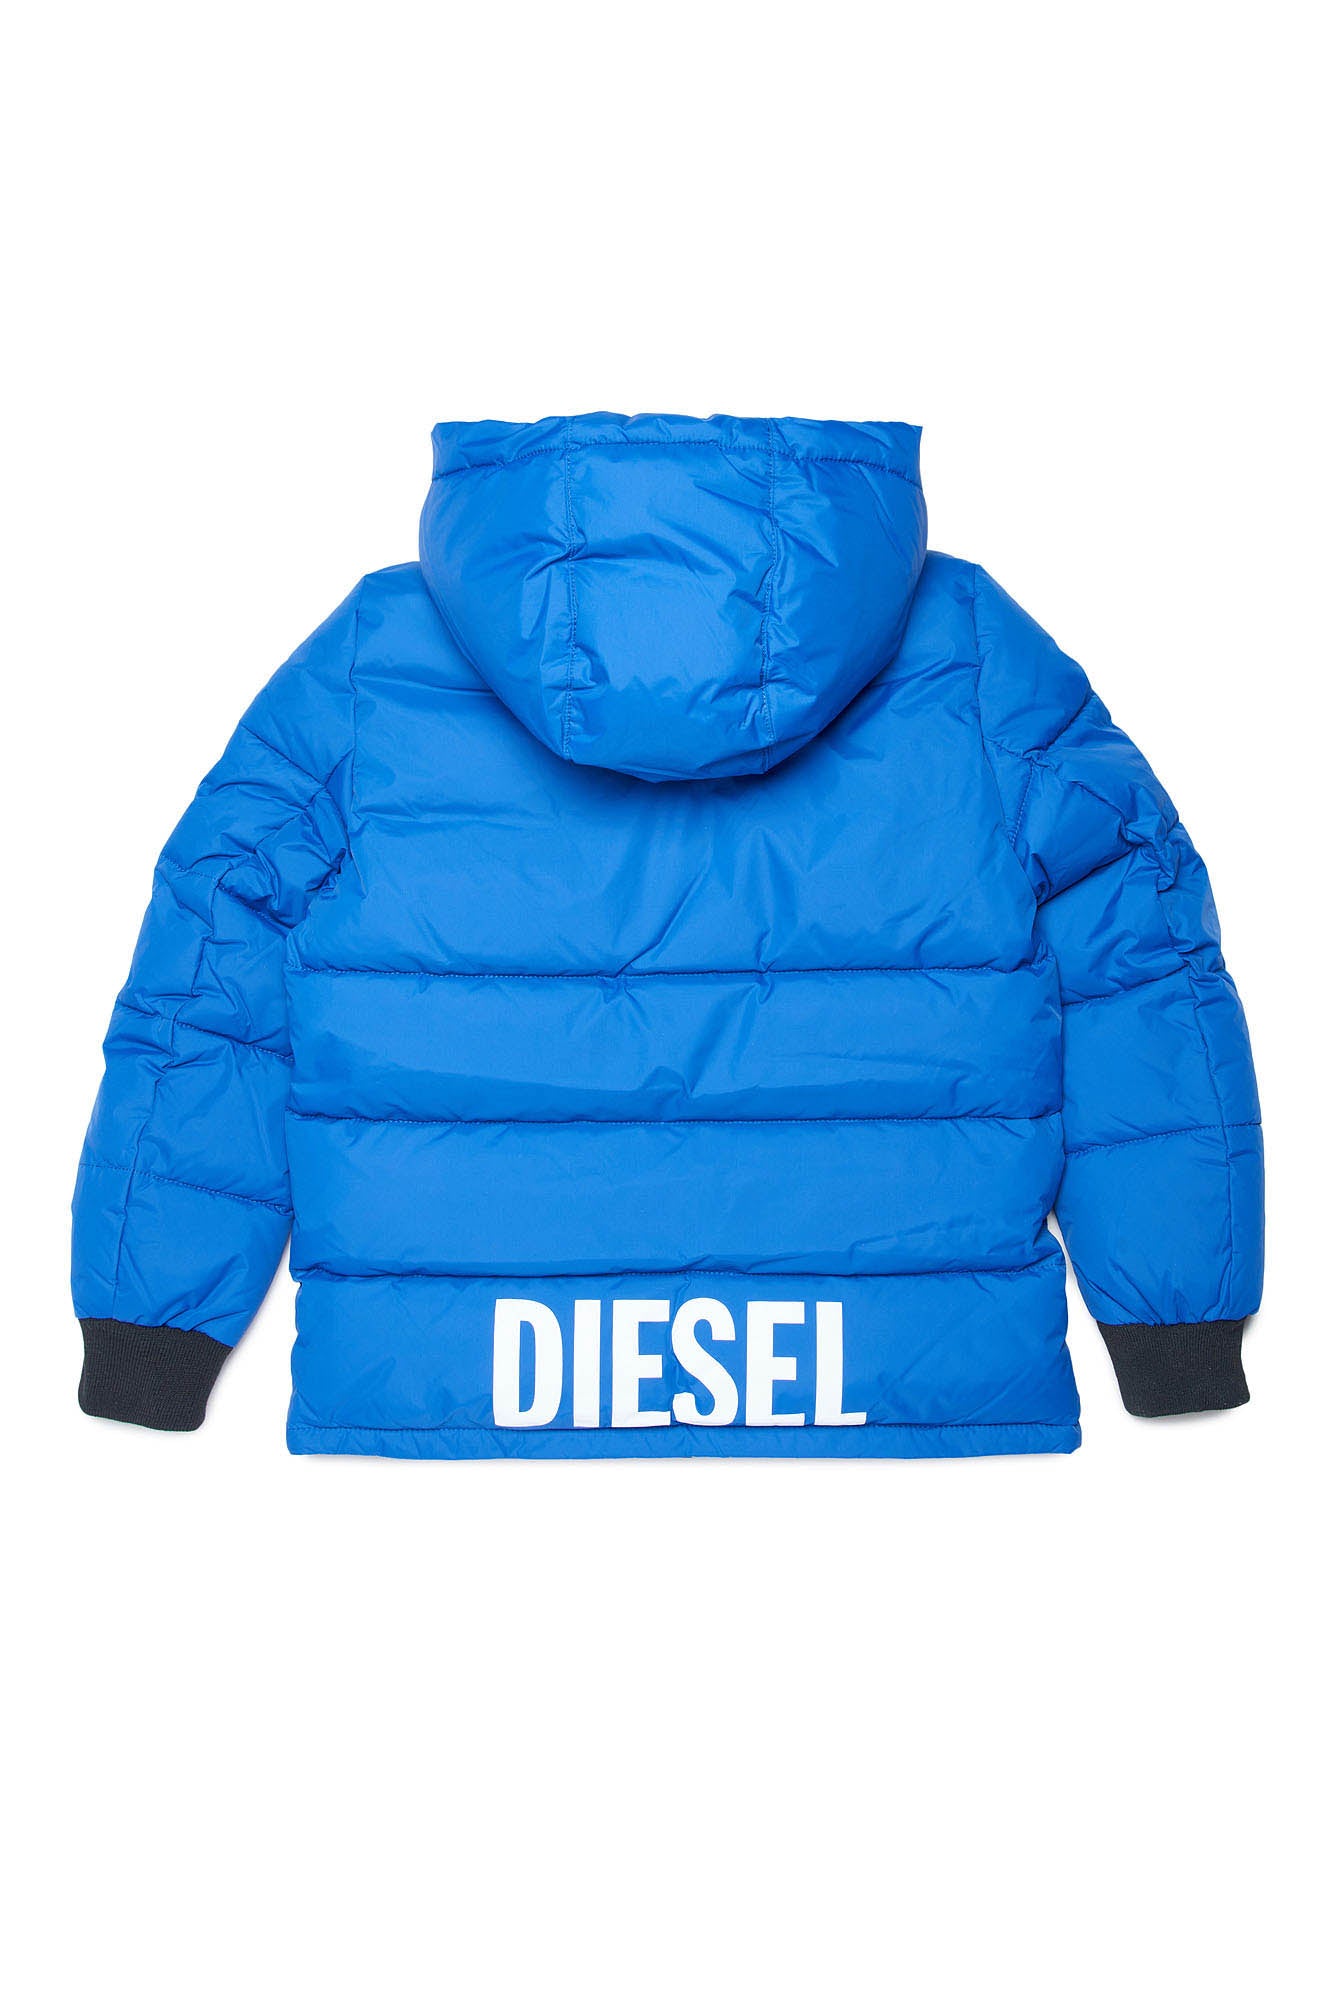 Diesel kid padded jacket with hood and logo on back | BRAVE KID